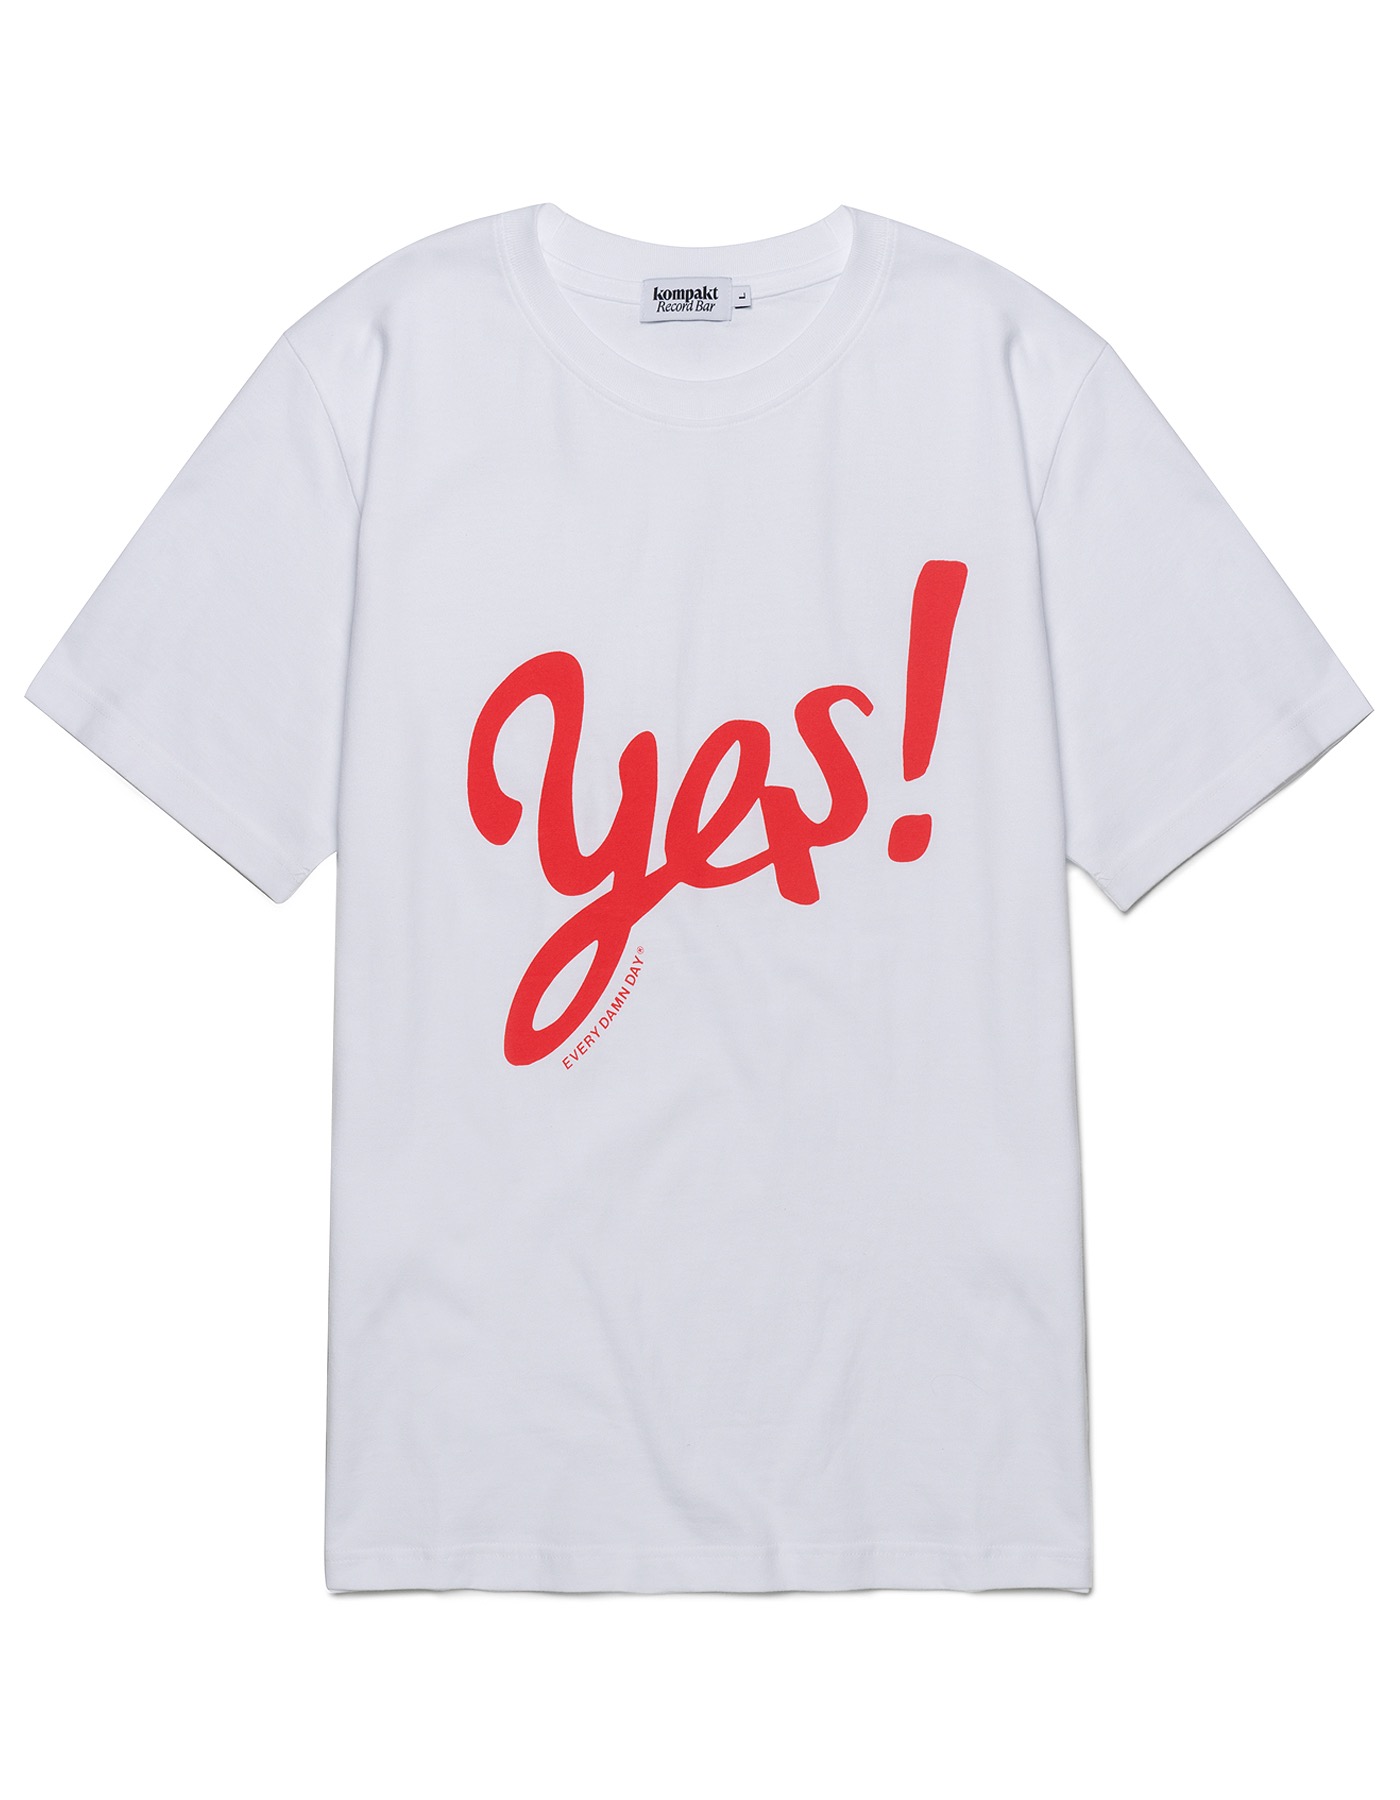 Yes! T-shirts - White